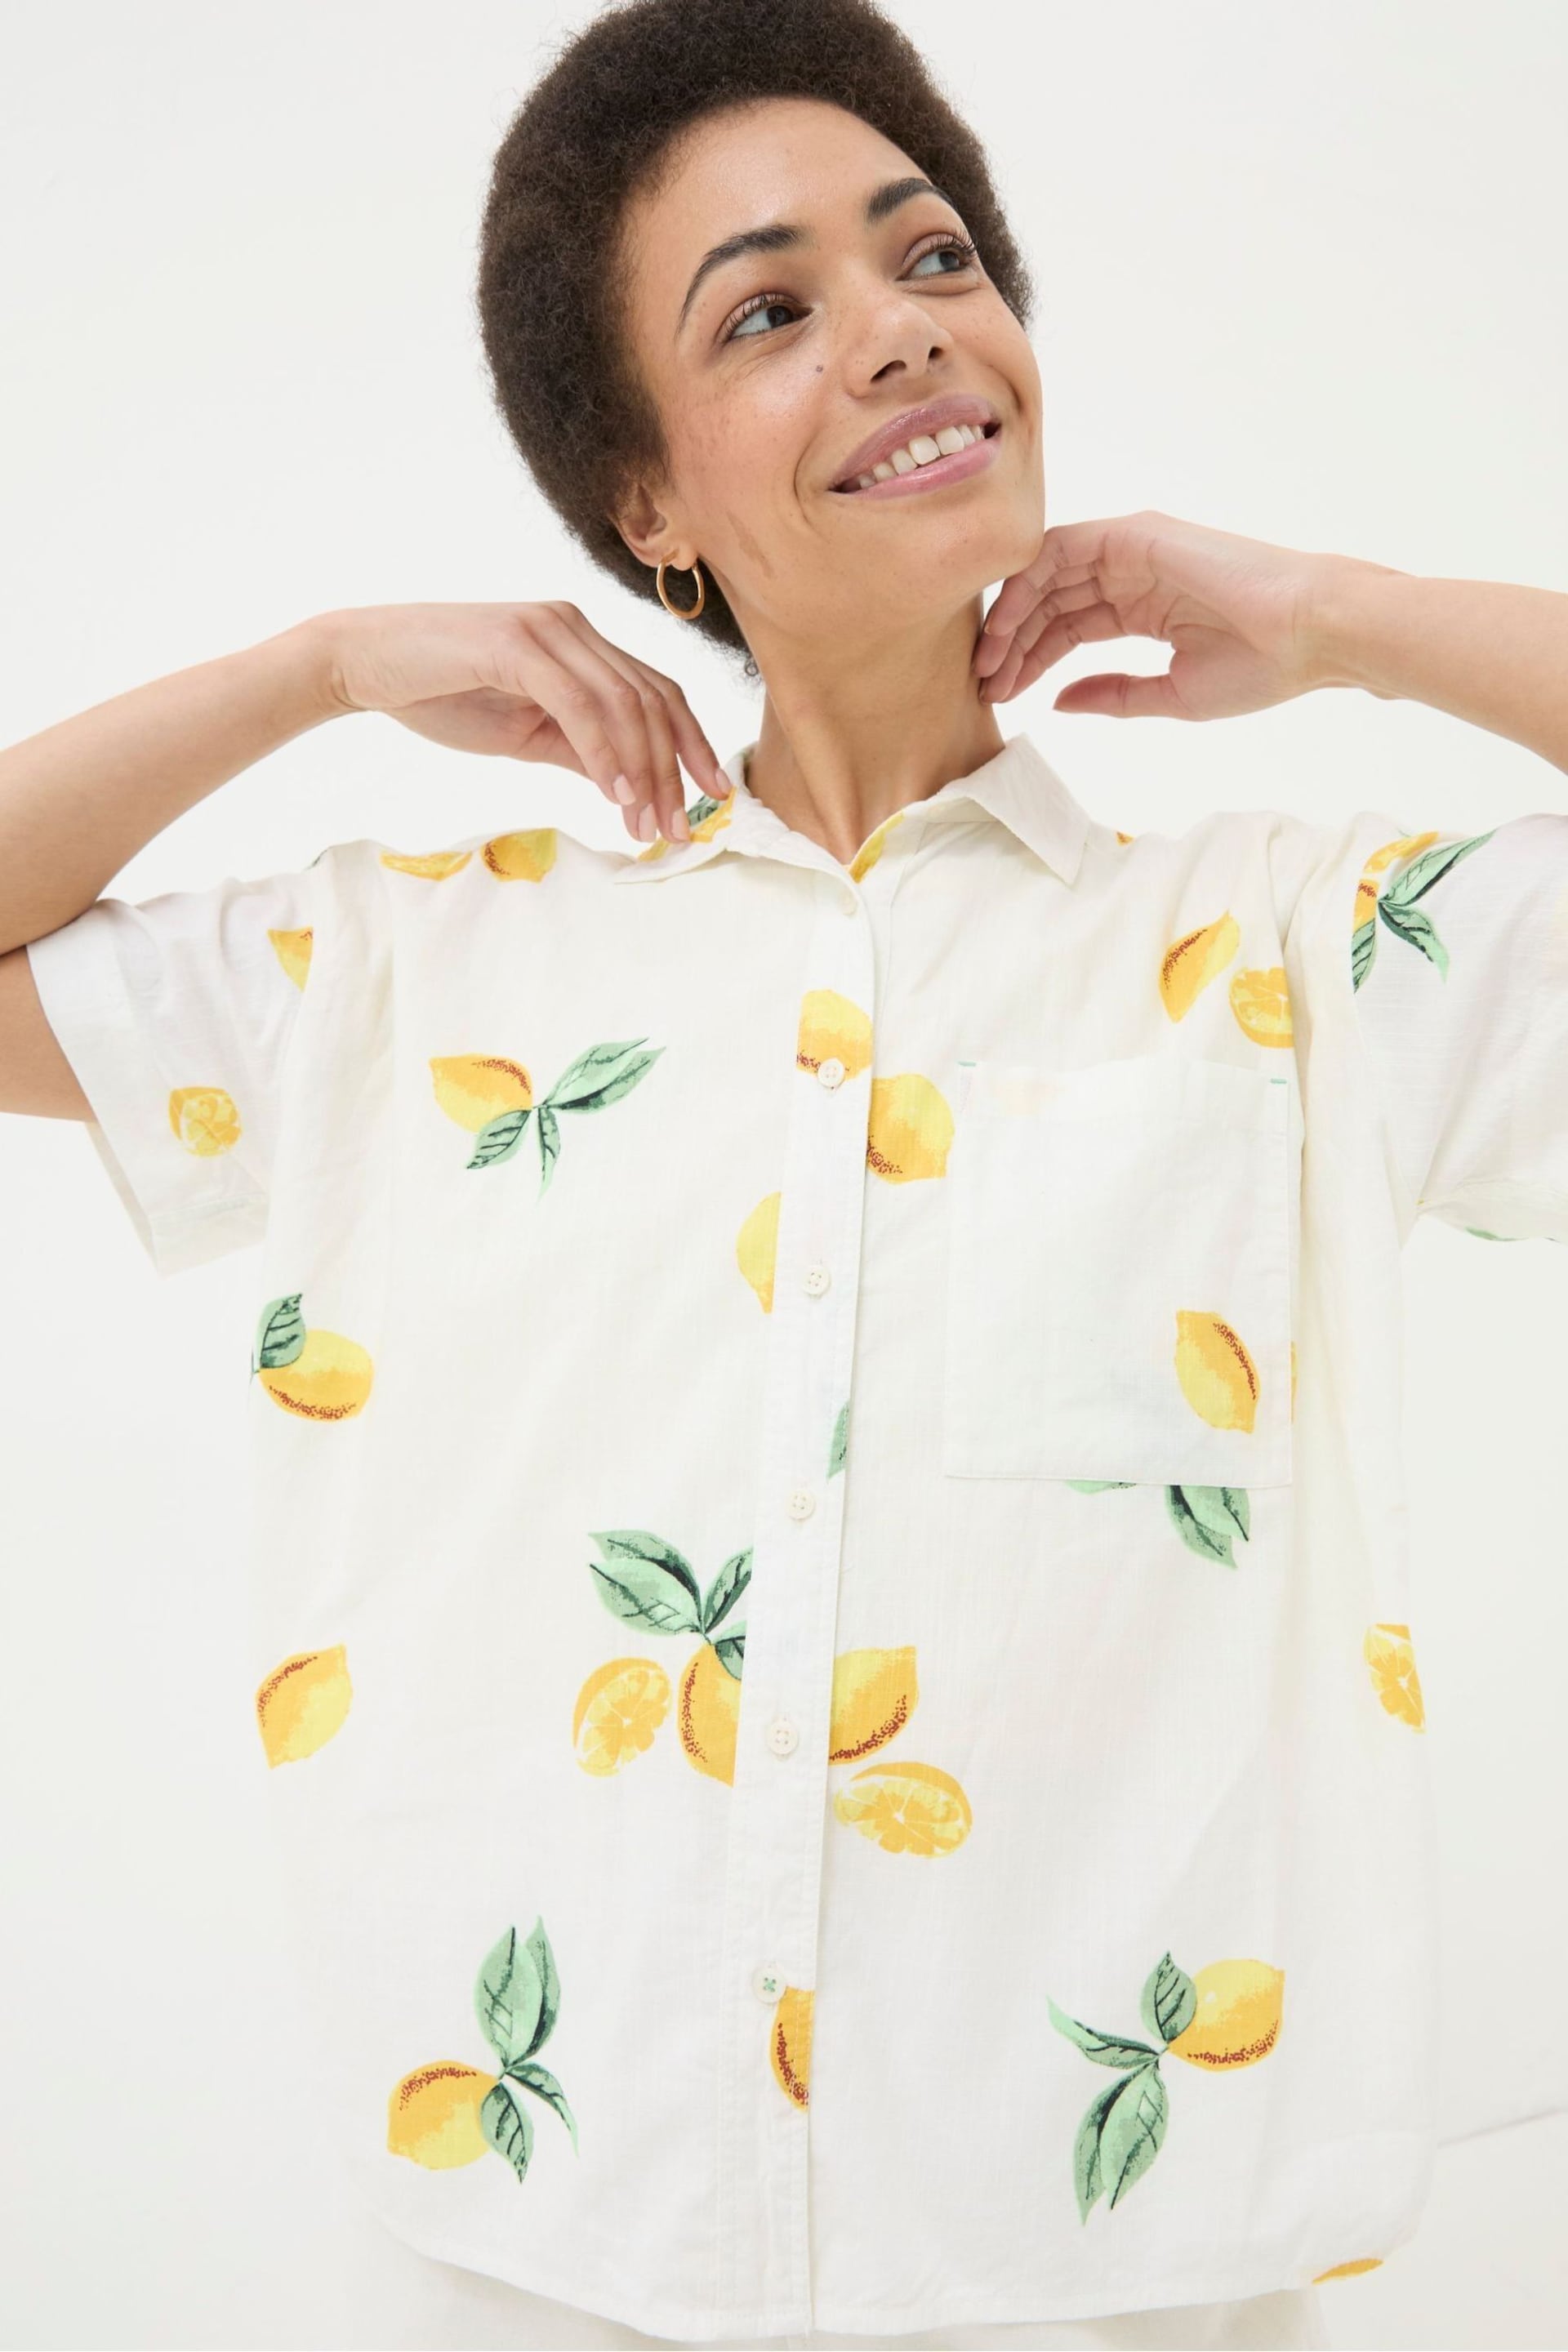 FatFace Natural Lemons Shirt - Image 1 of 6